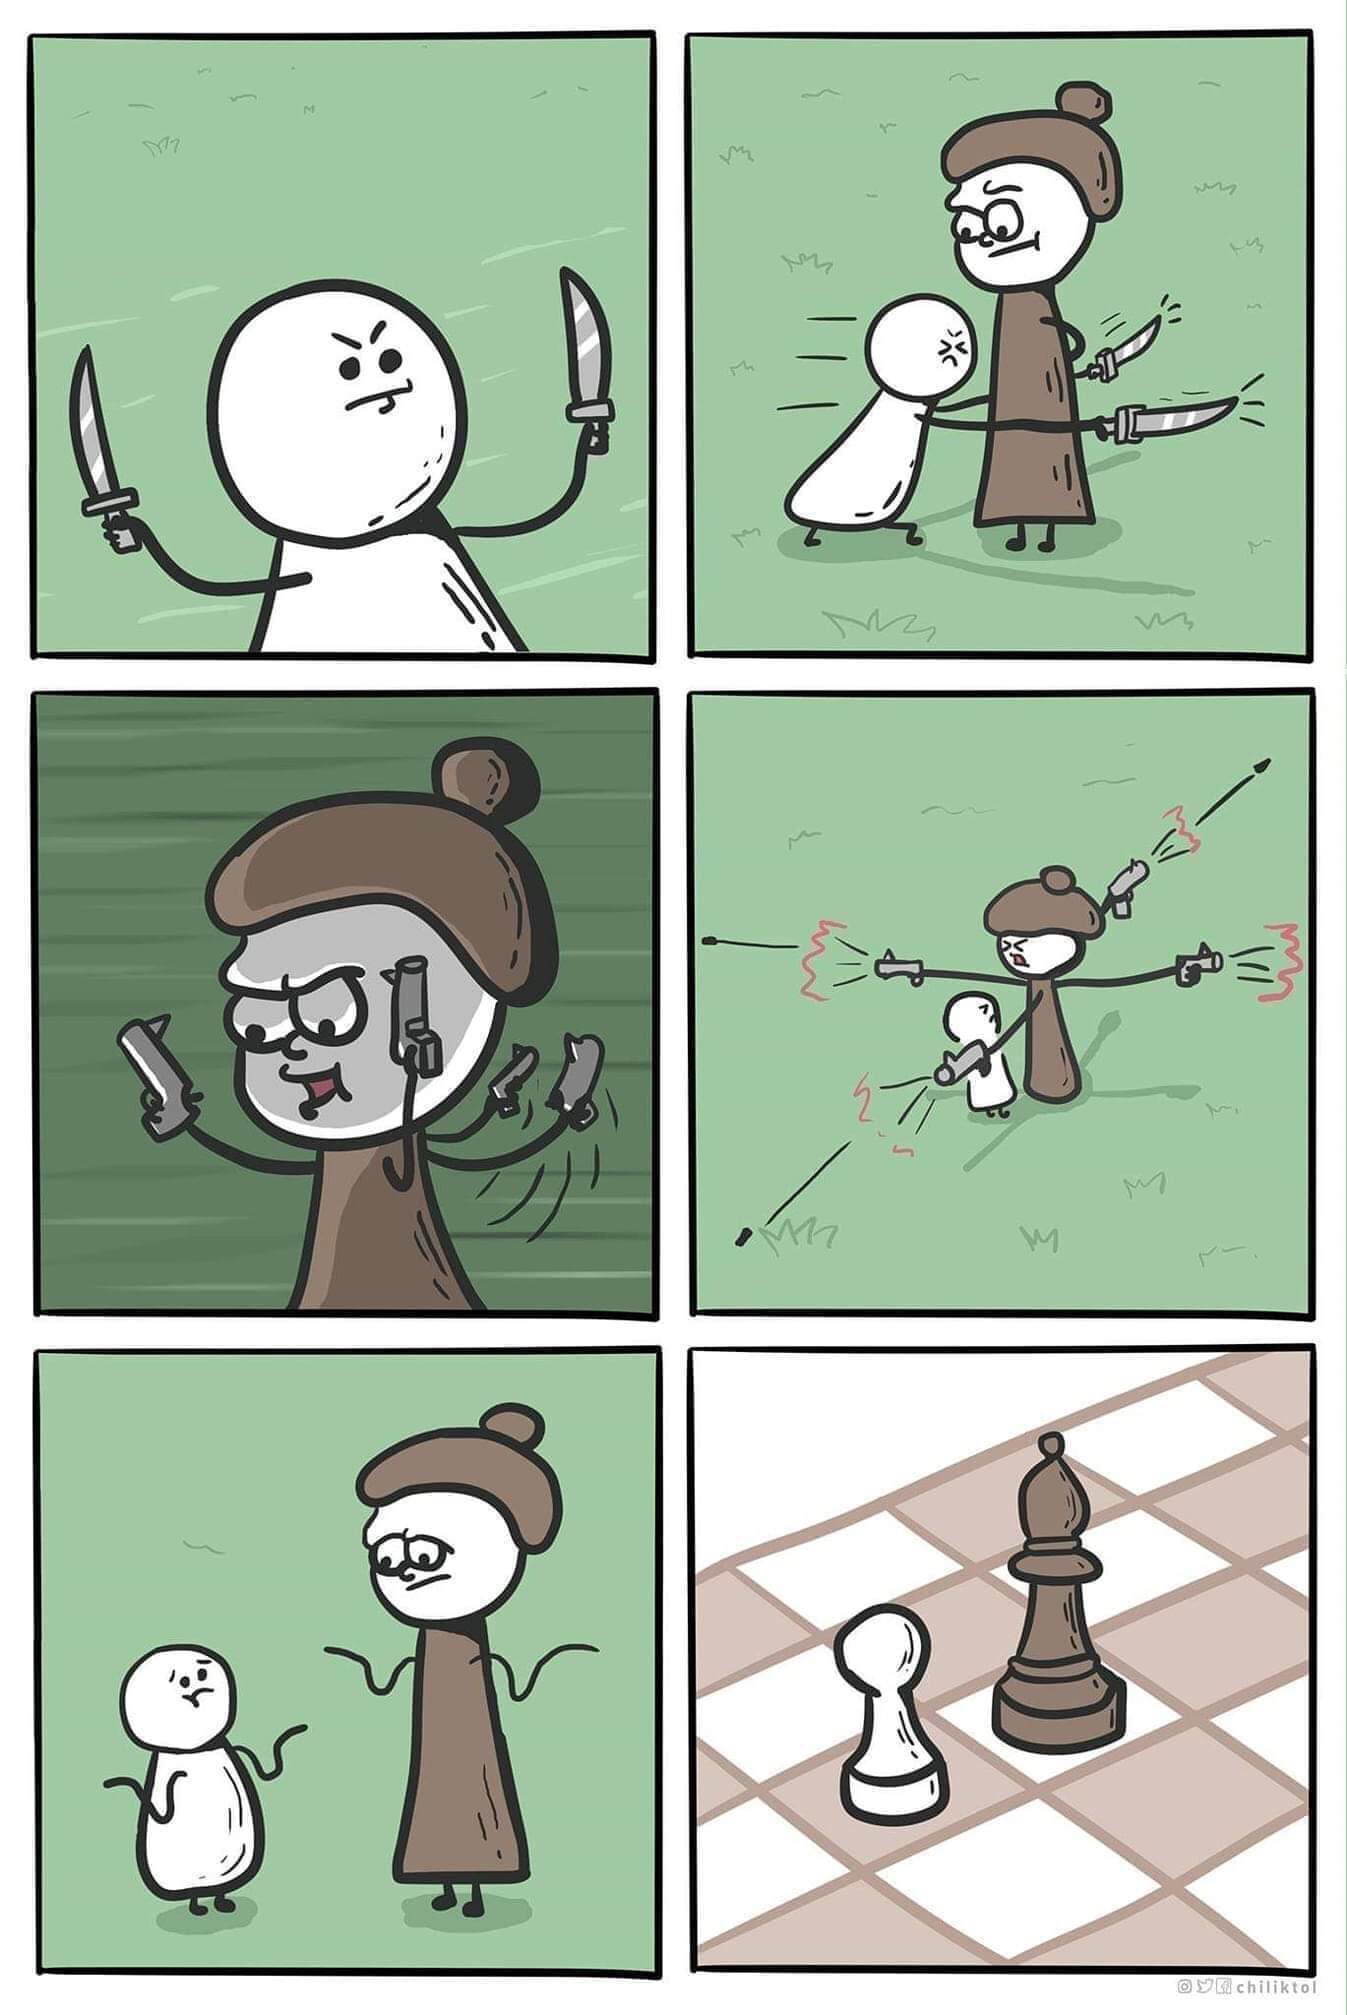 memes - chess comic